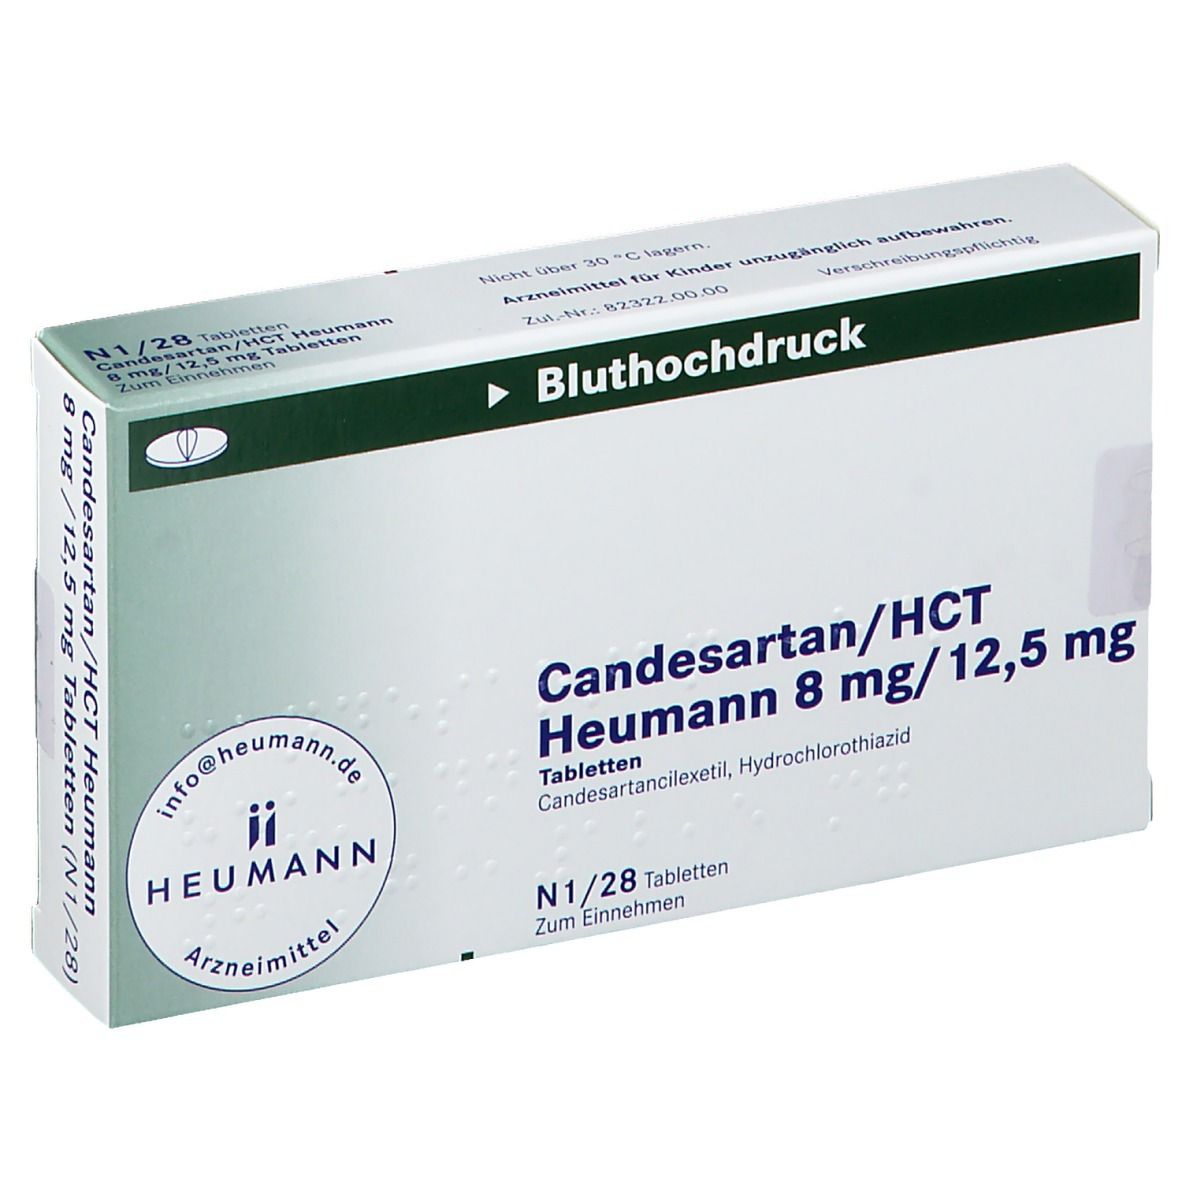 Candesartan/HCT Heumann 8 mg/12,5 mg